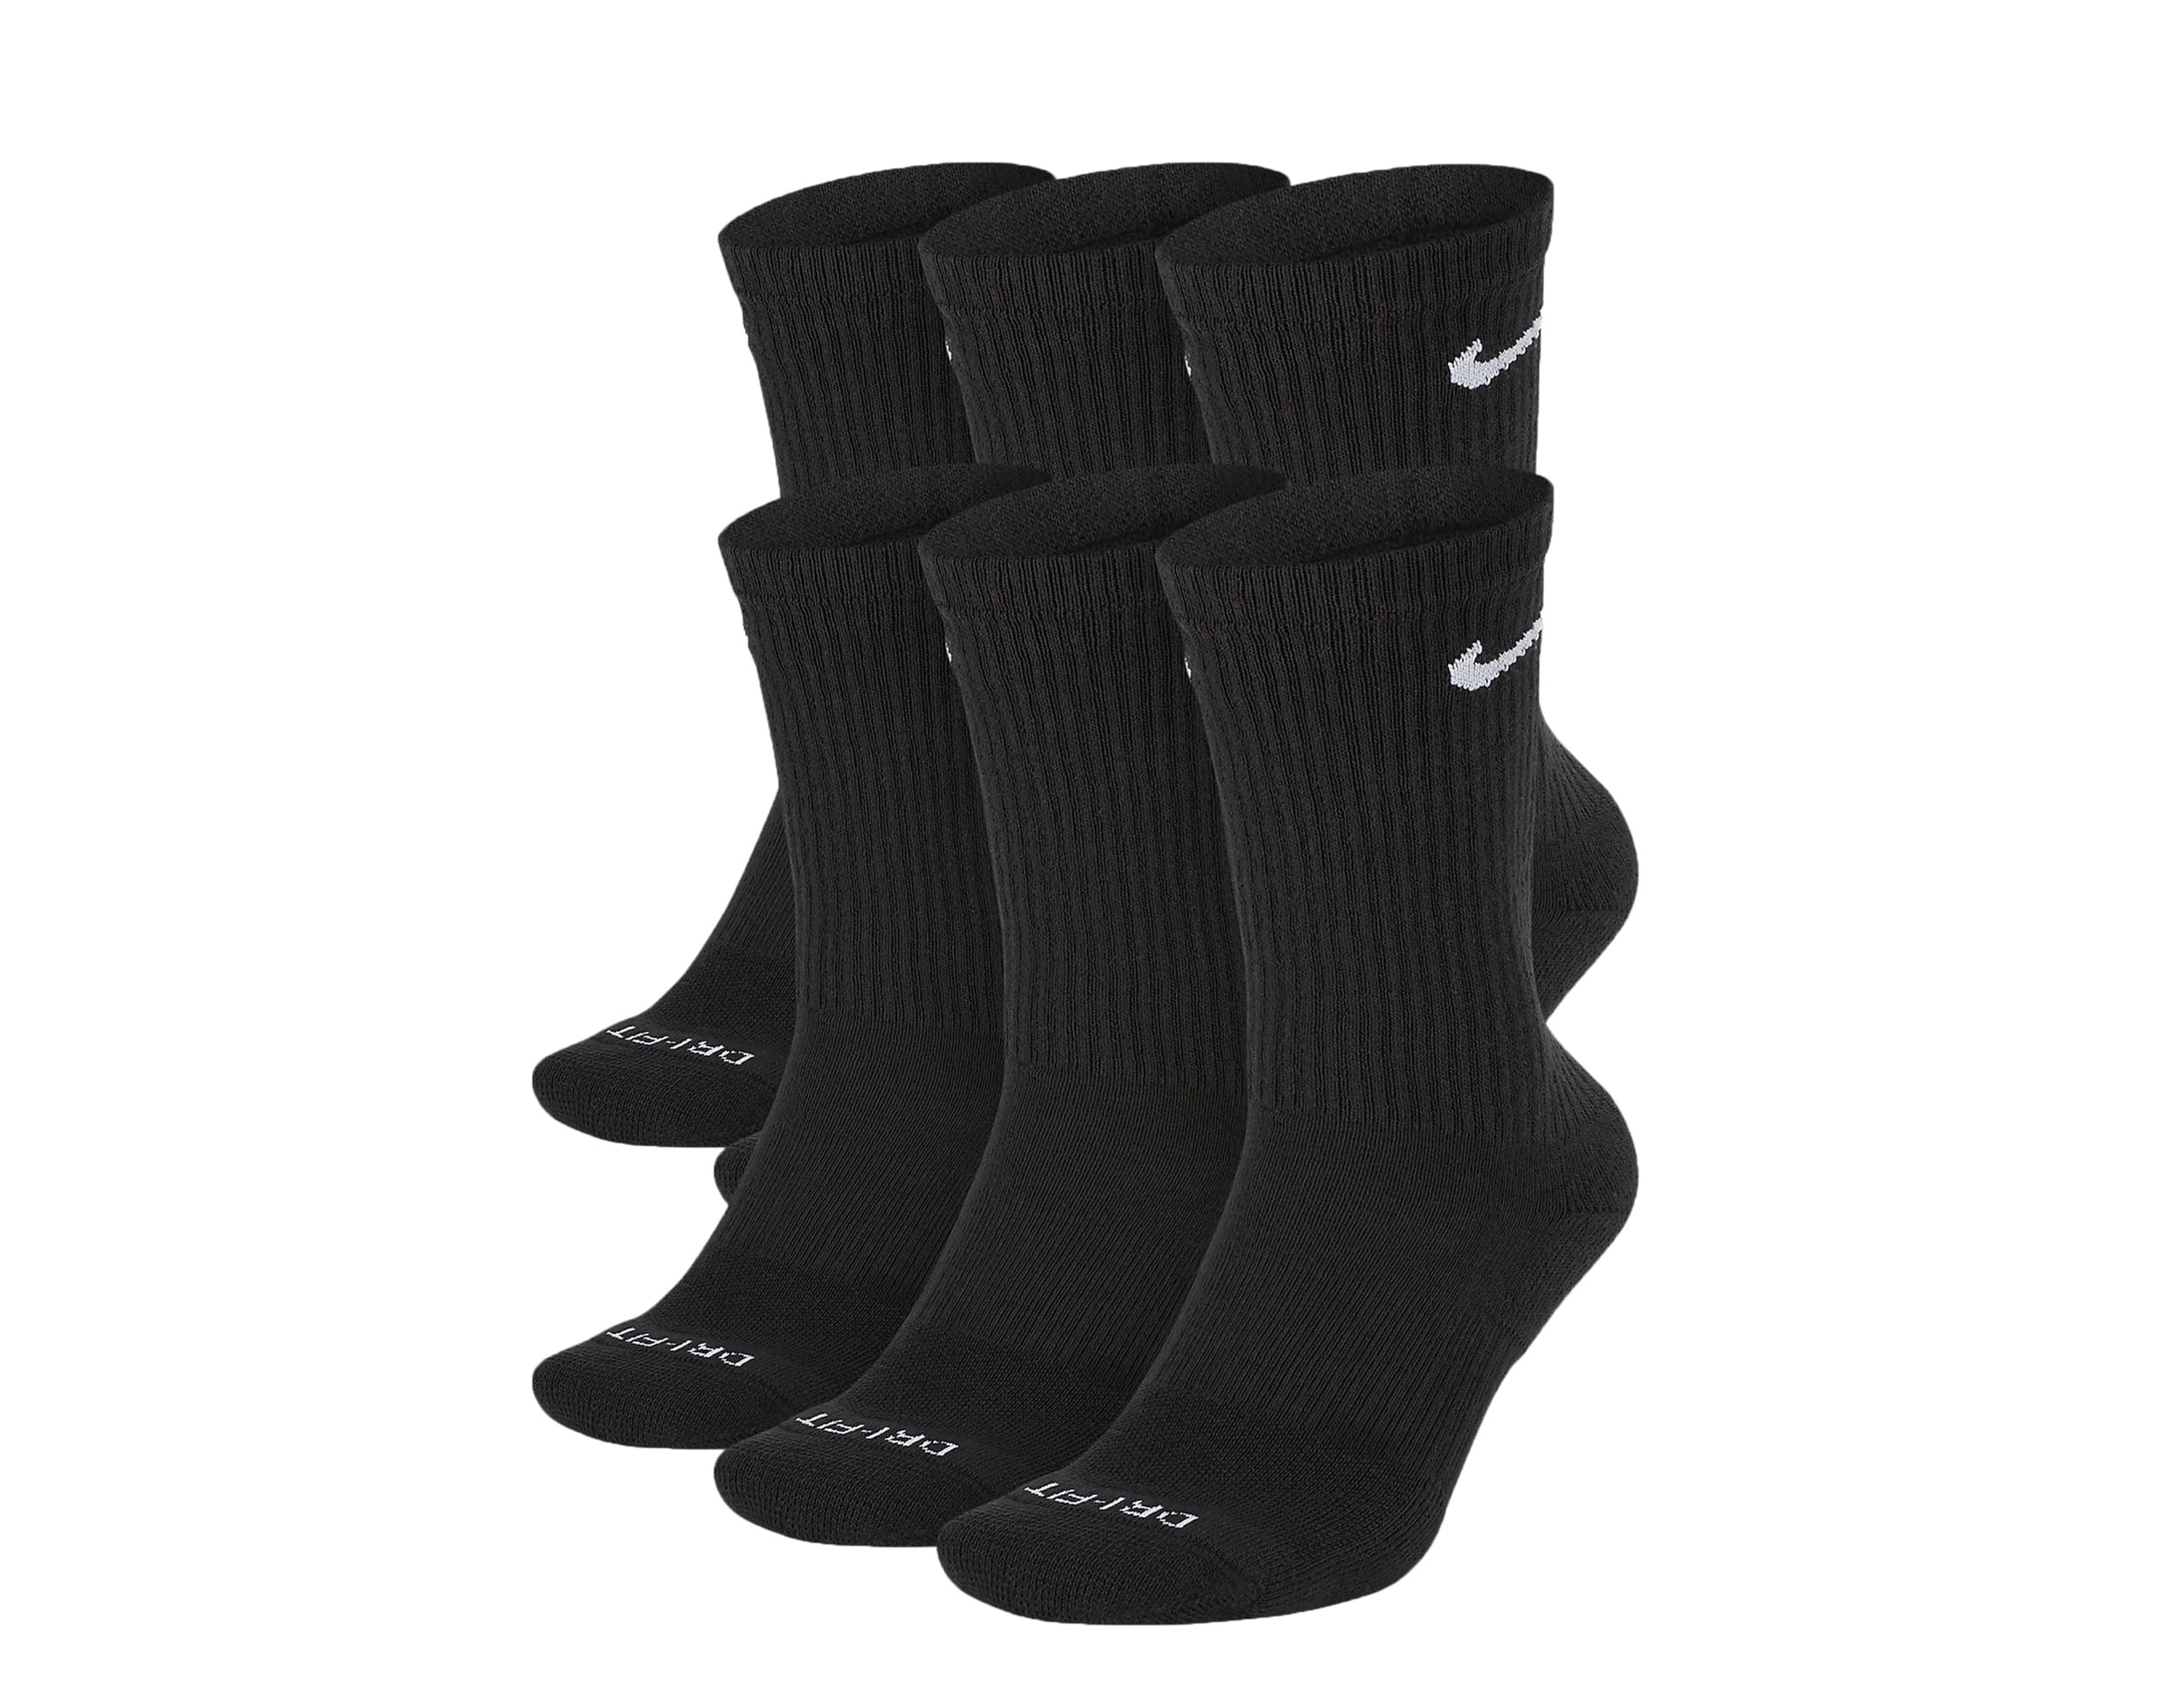 Nike - Nike Everyday Plus Cushion Crew Black/White Socks - 6 Pair Pack ...